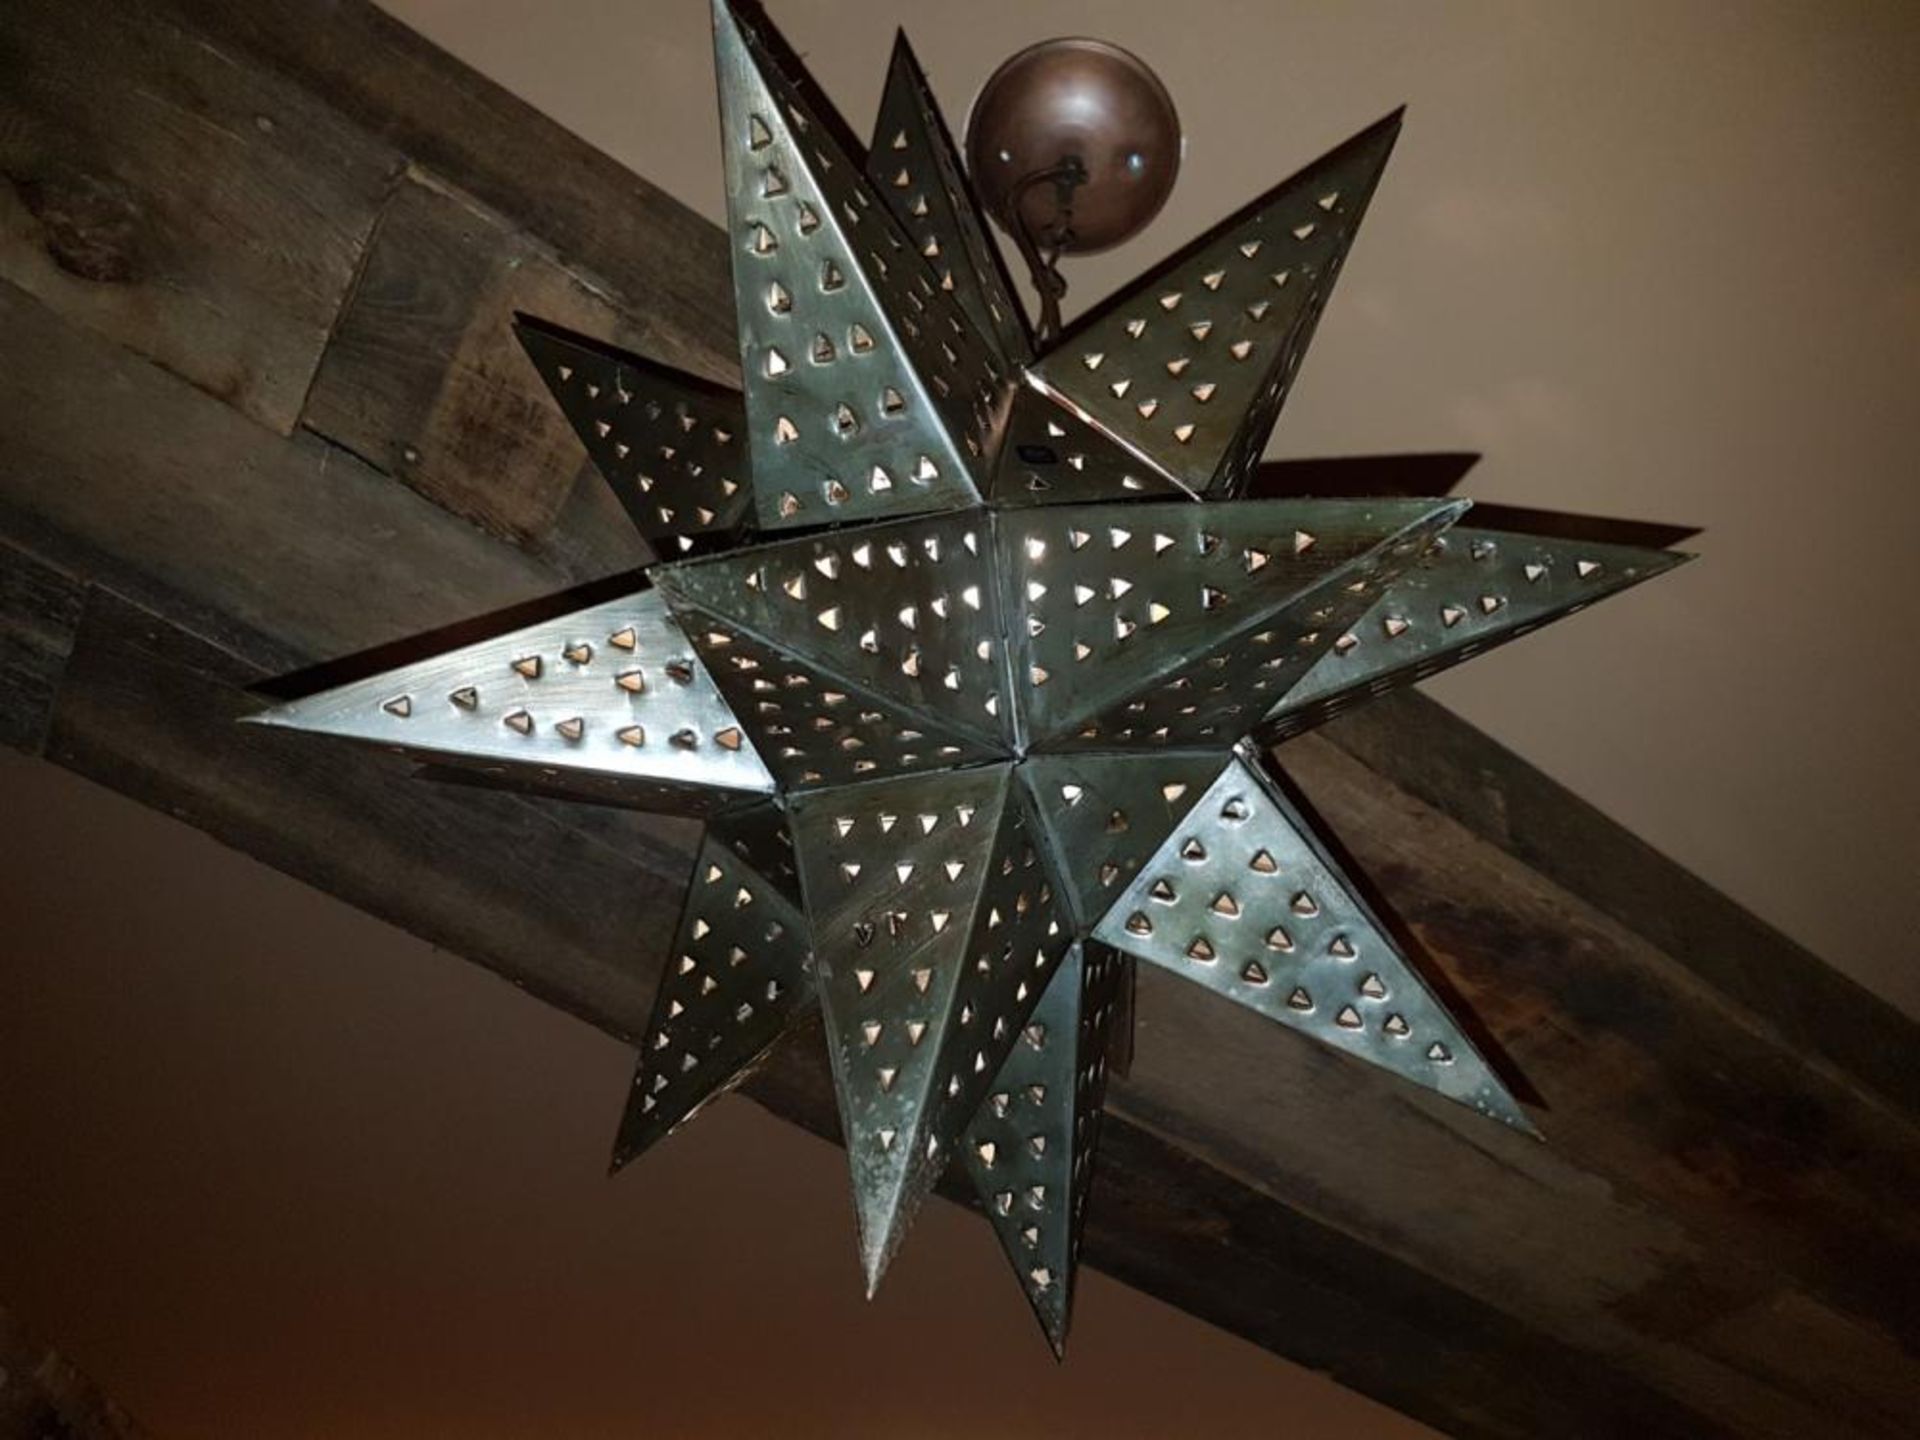 2 x Perforated Metal Star Shaped Pendant Light Fittings - 80cm Drop x 40cm Diameter - CL363 - Locati - Image 3 of 5